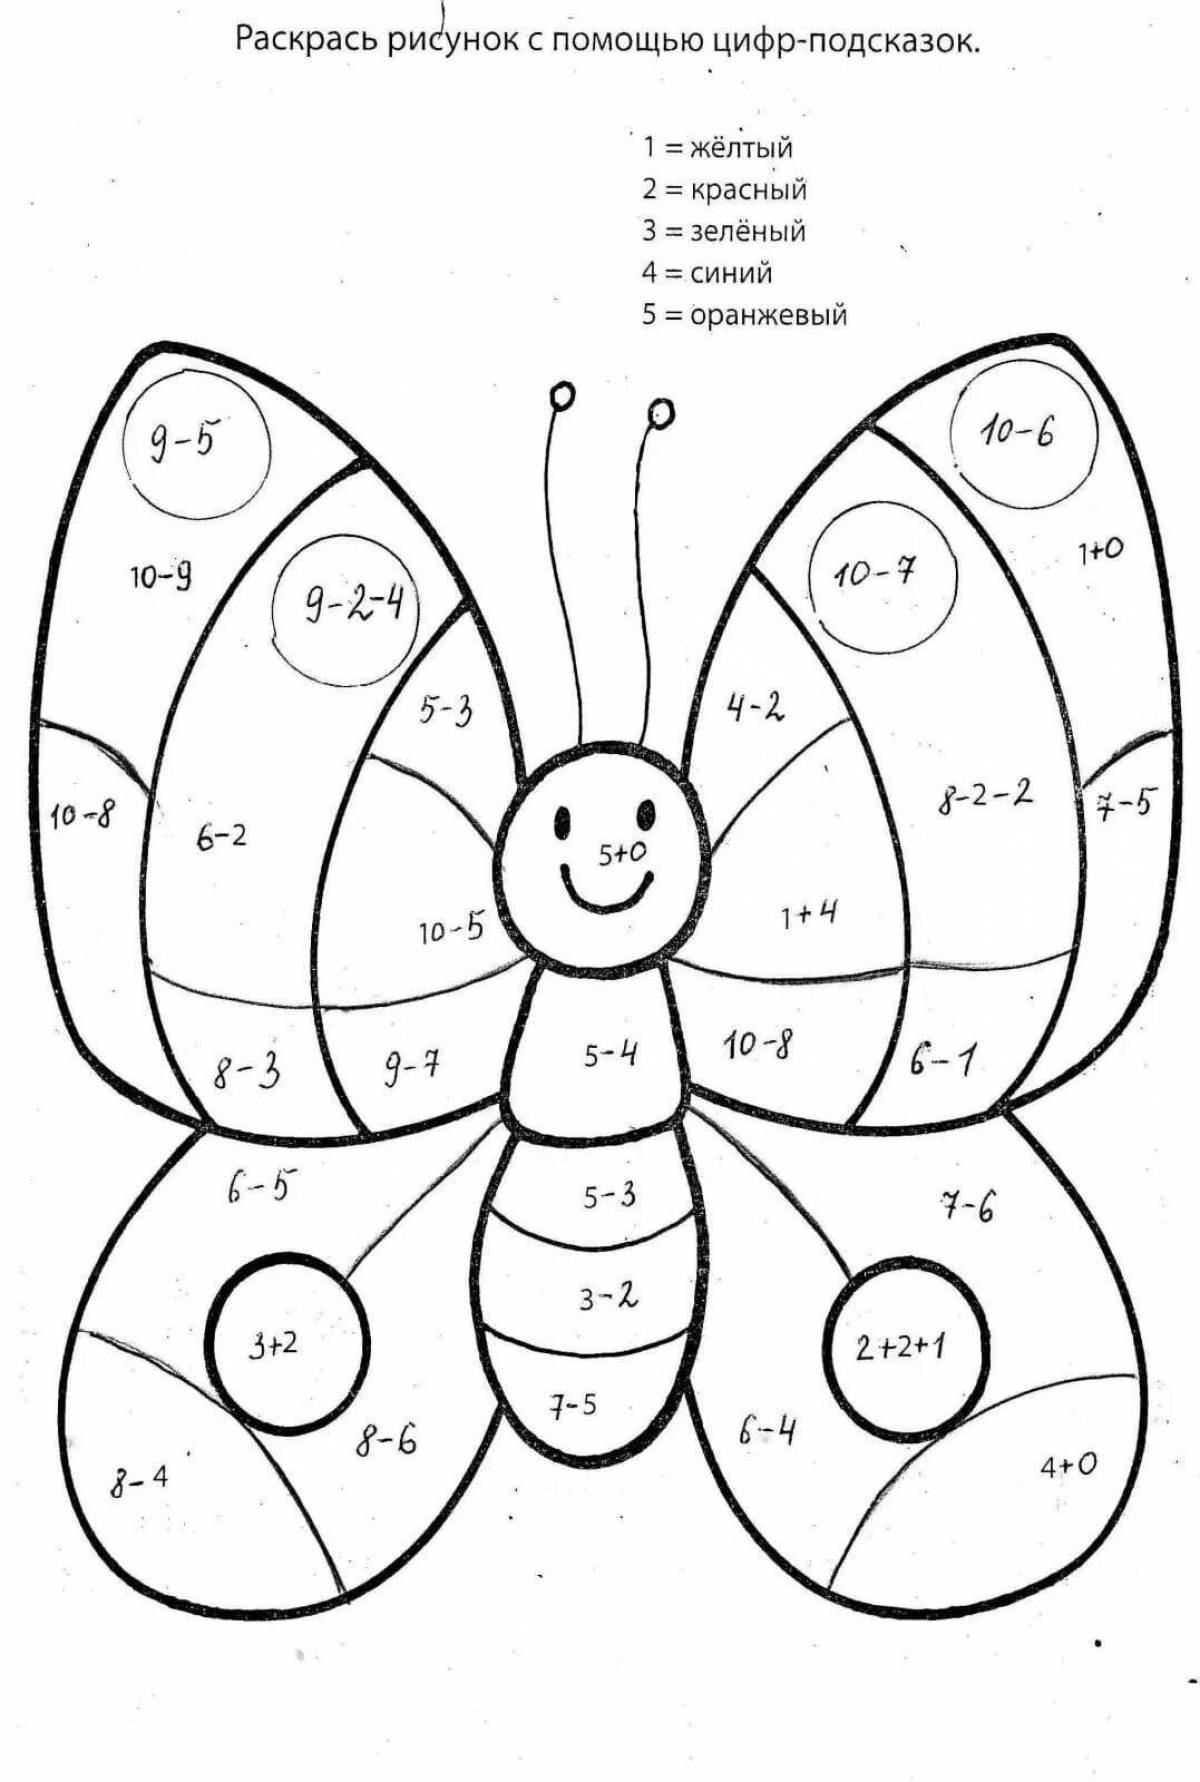 A fun math coloring book for preschoolers